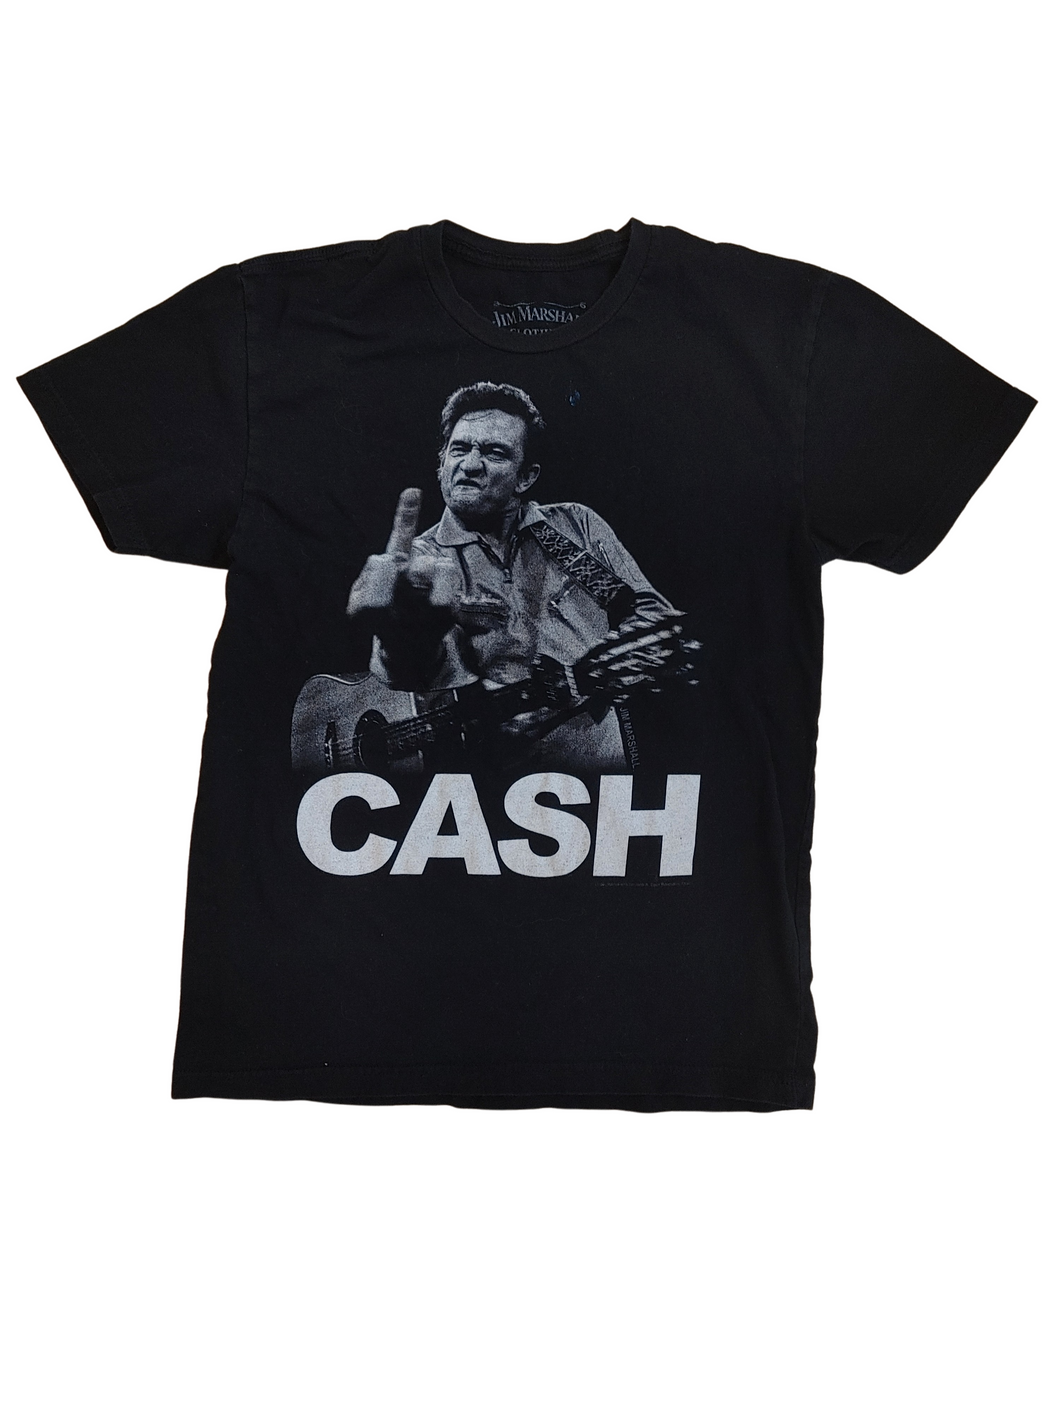 00s Classic Middle Finger Johnny Cash T-shirt - Size S